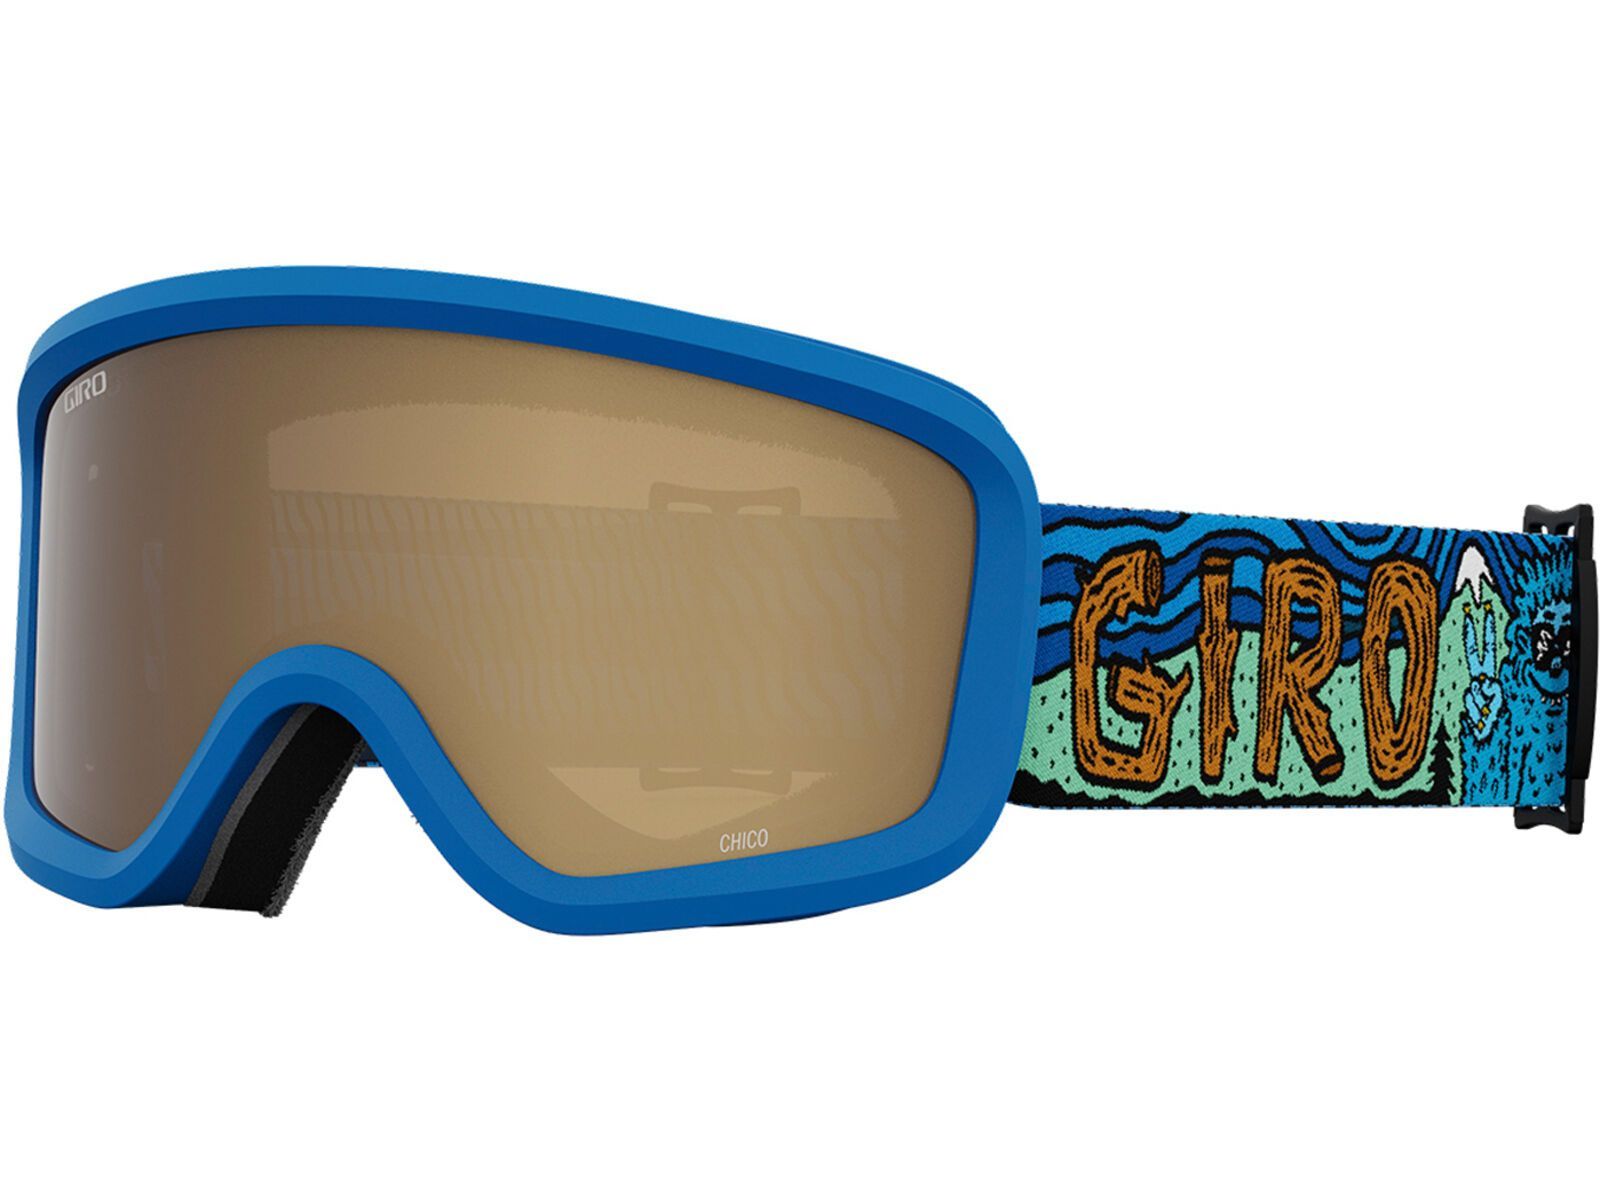 Giro Chico 2.0 Grey Cobalt, blue shreddy yeti | Bild 1